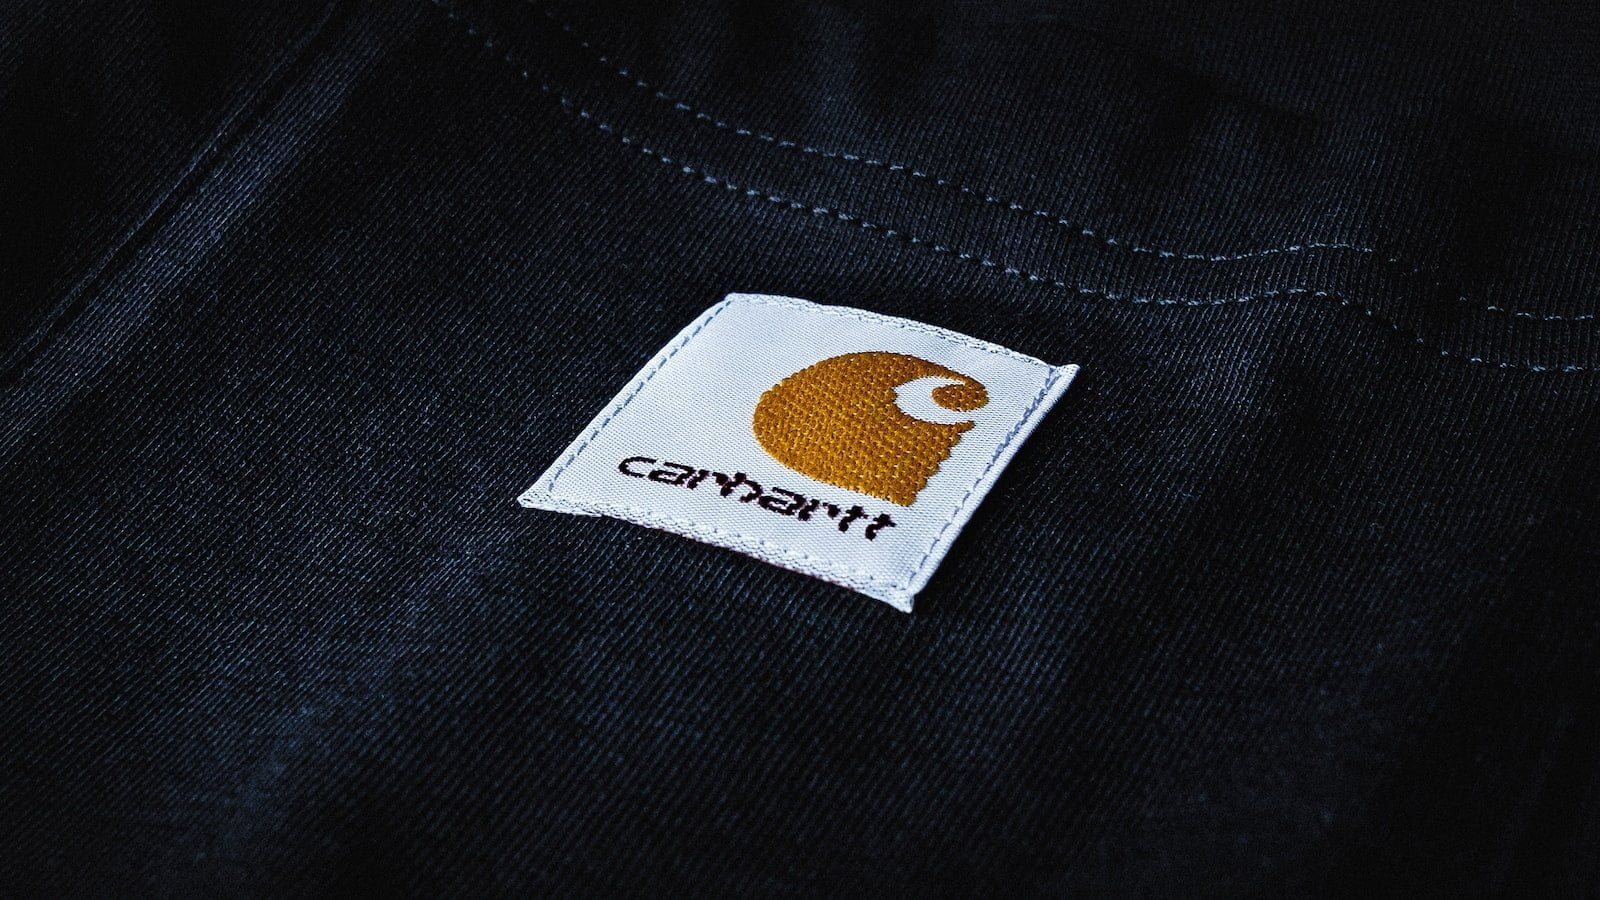 How do you identify Carhartt jeans?